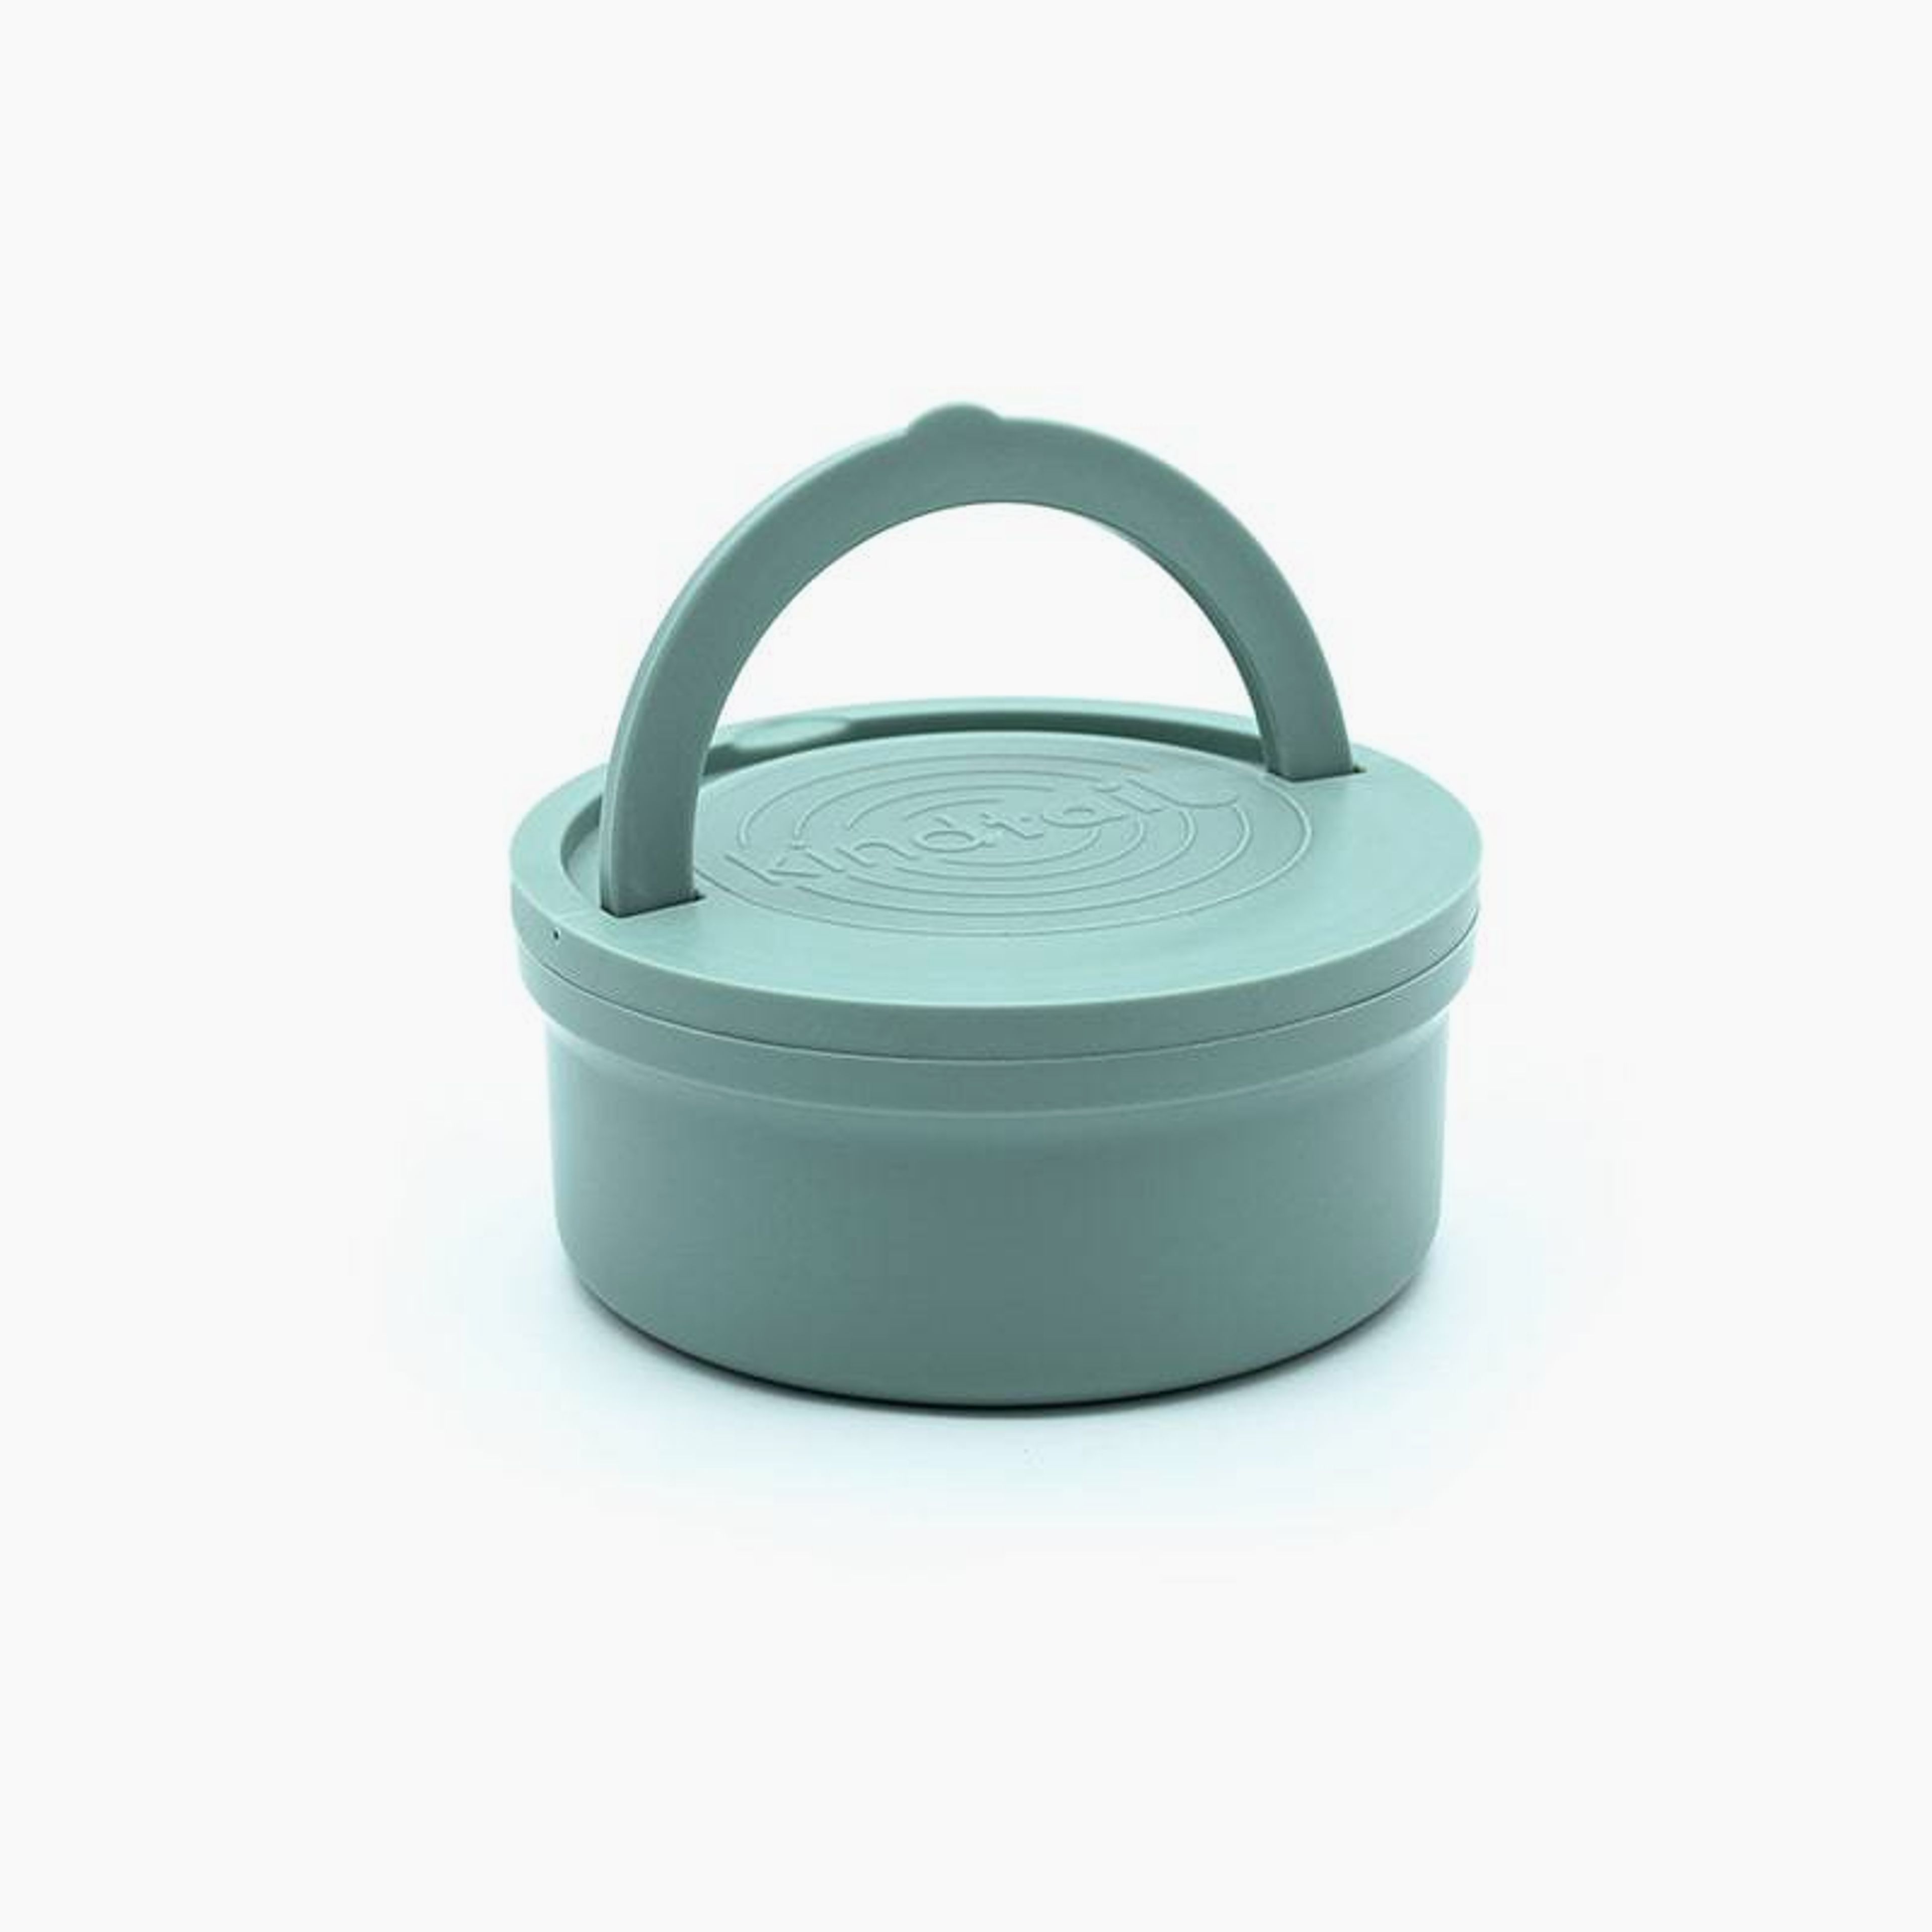 Portabowls | Portable travel & home bowl set